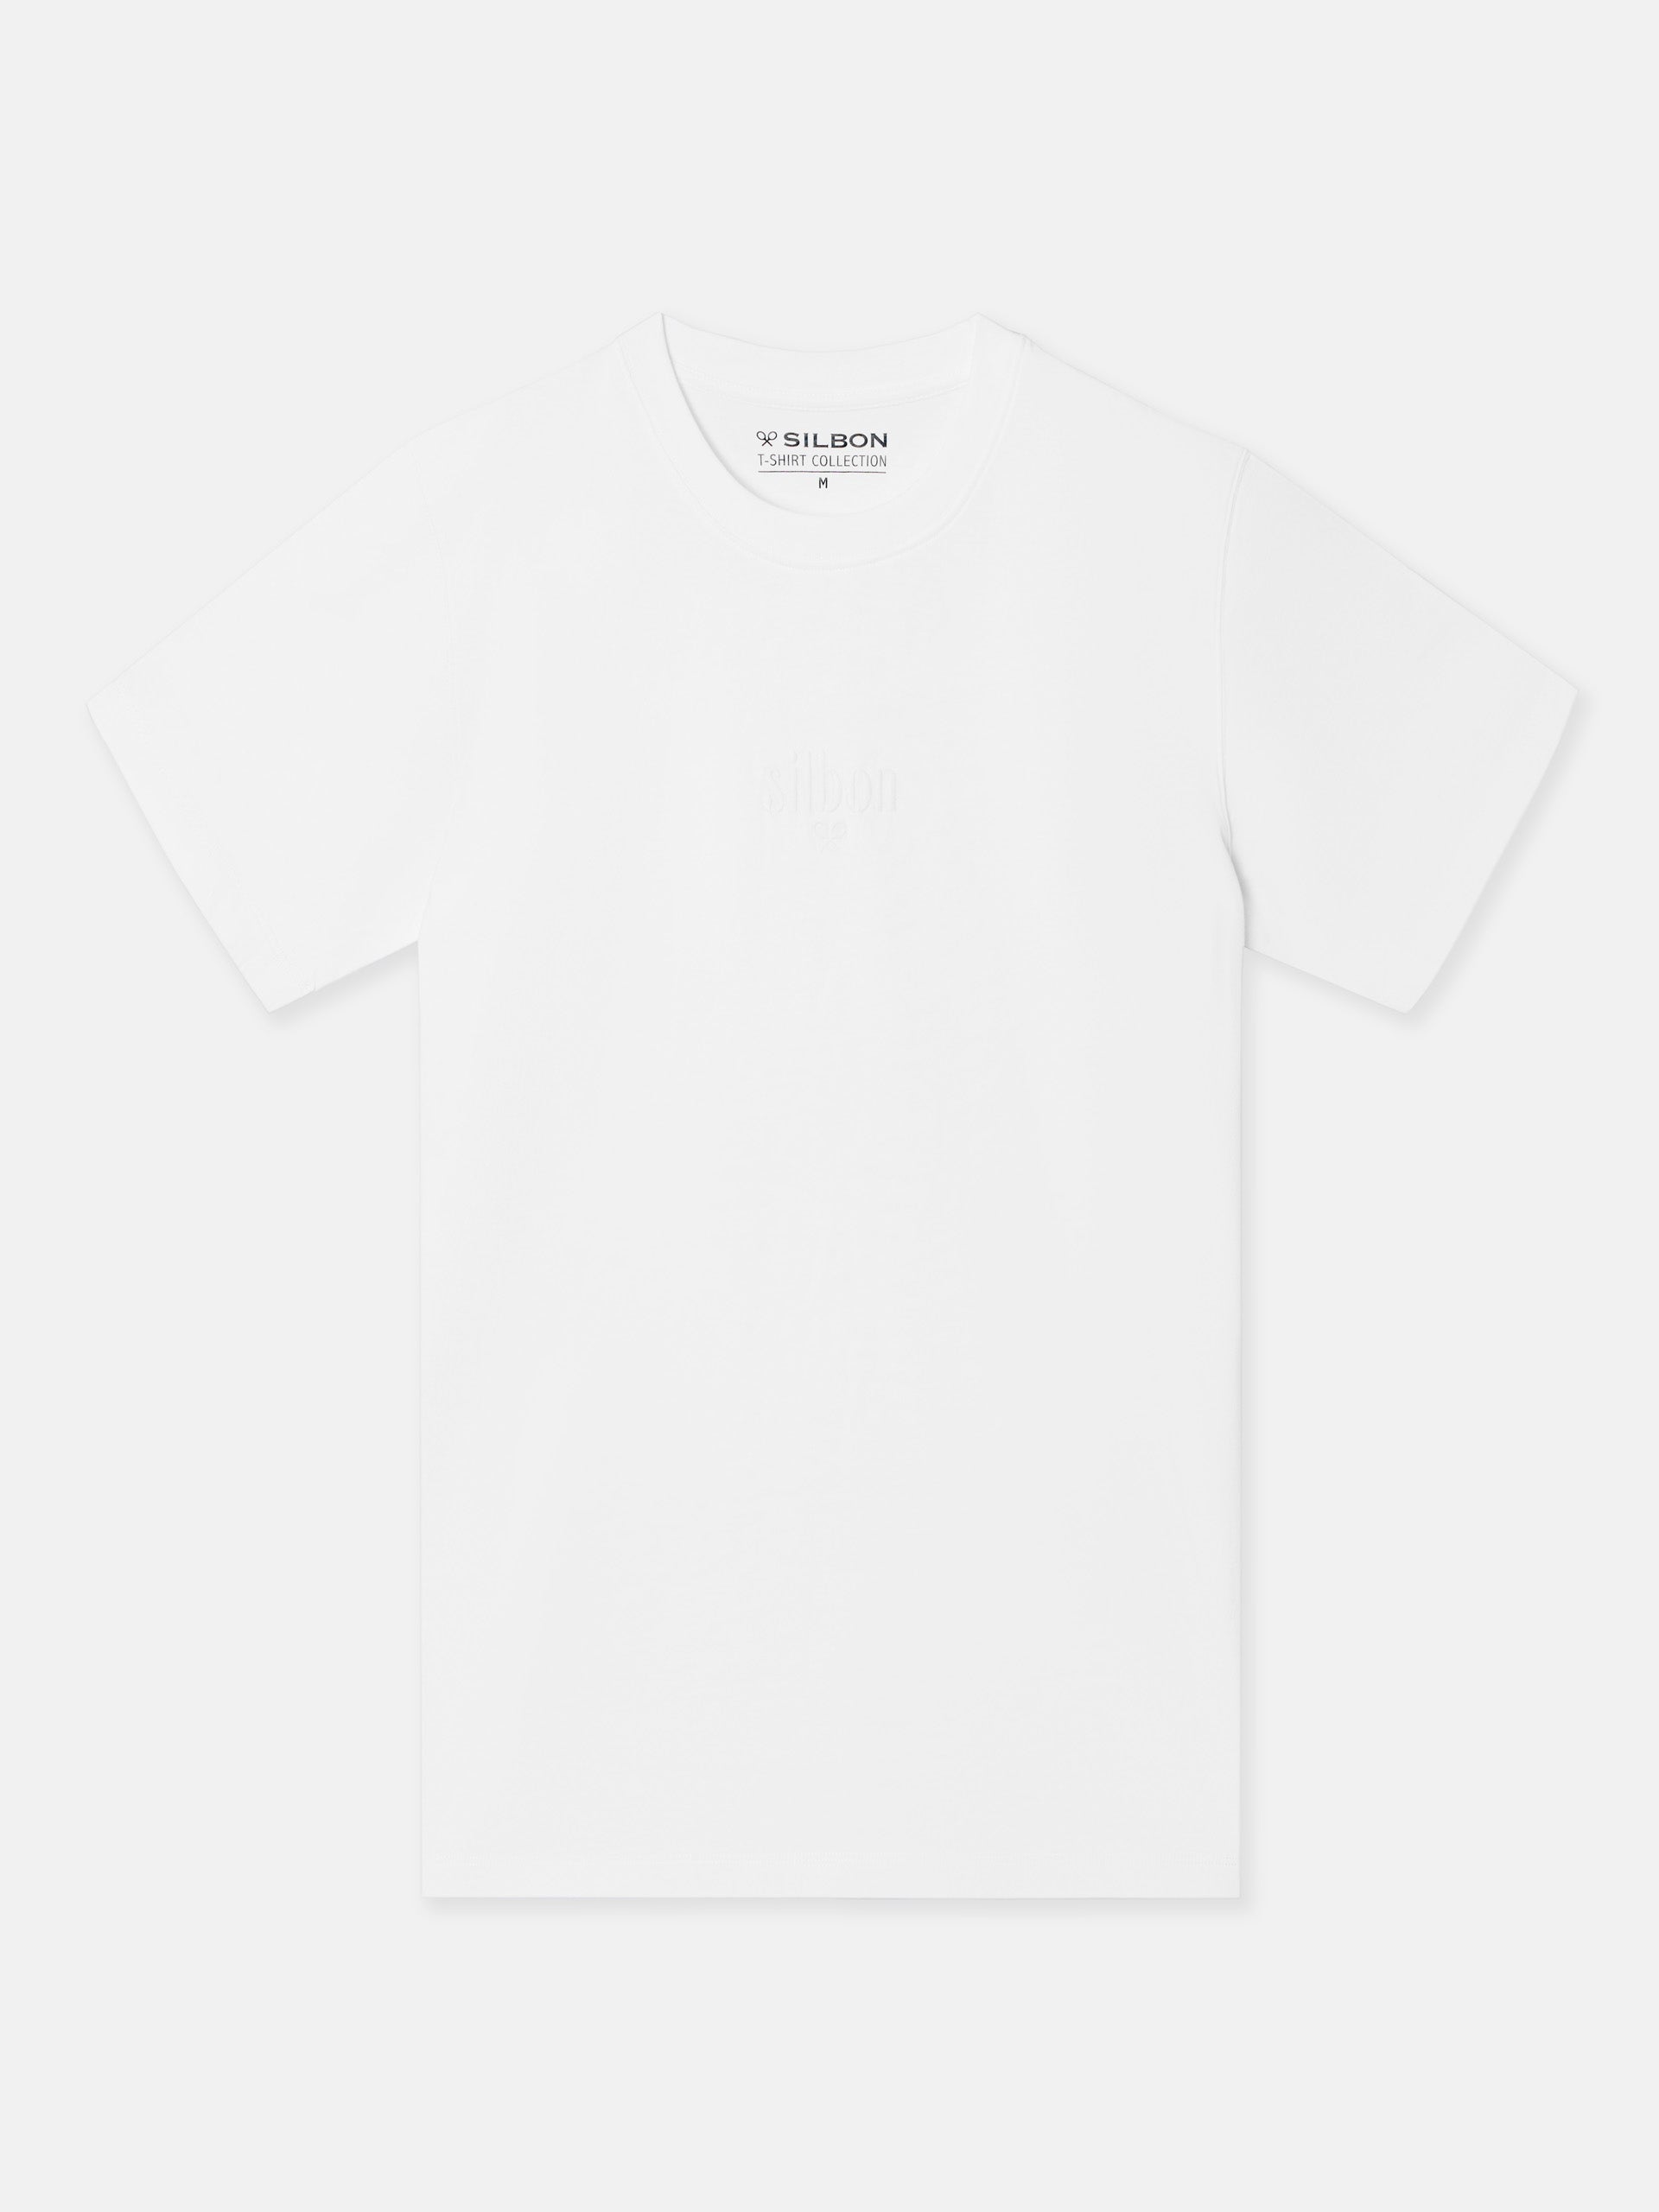 Camiseta silbon special fit blanca